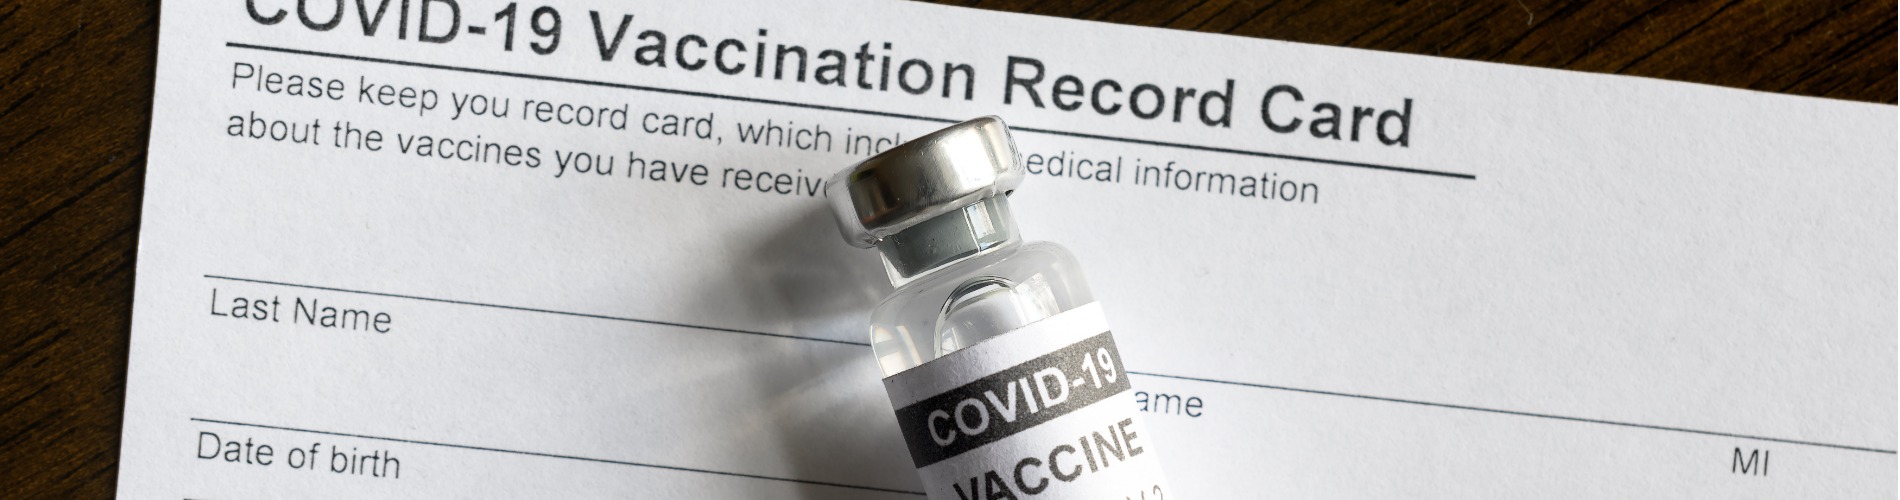 covid-19-vaccine-bottle-on-coronavirus-vaccination-record-card 1900x500